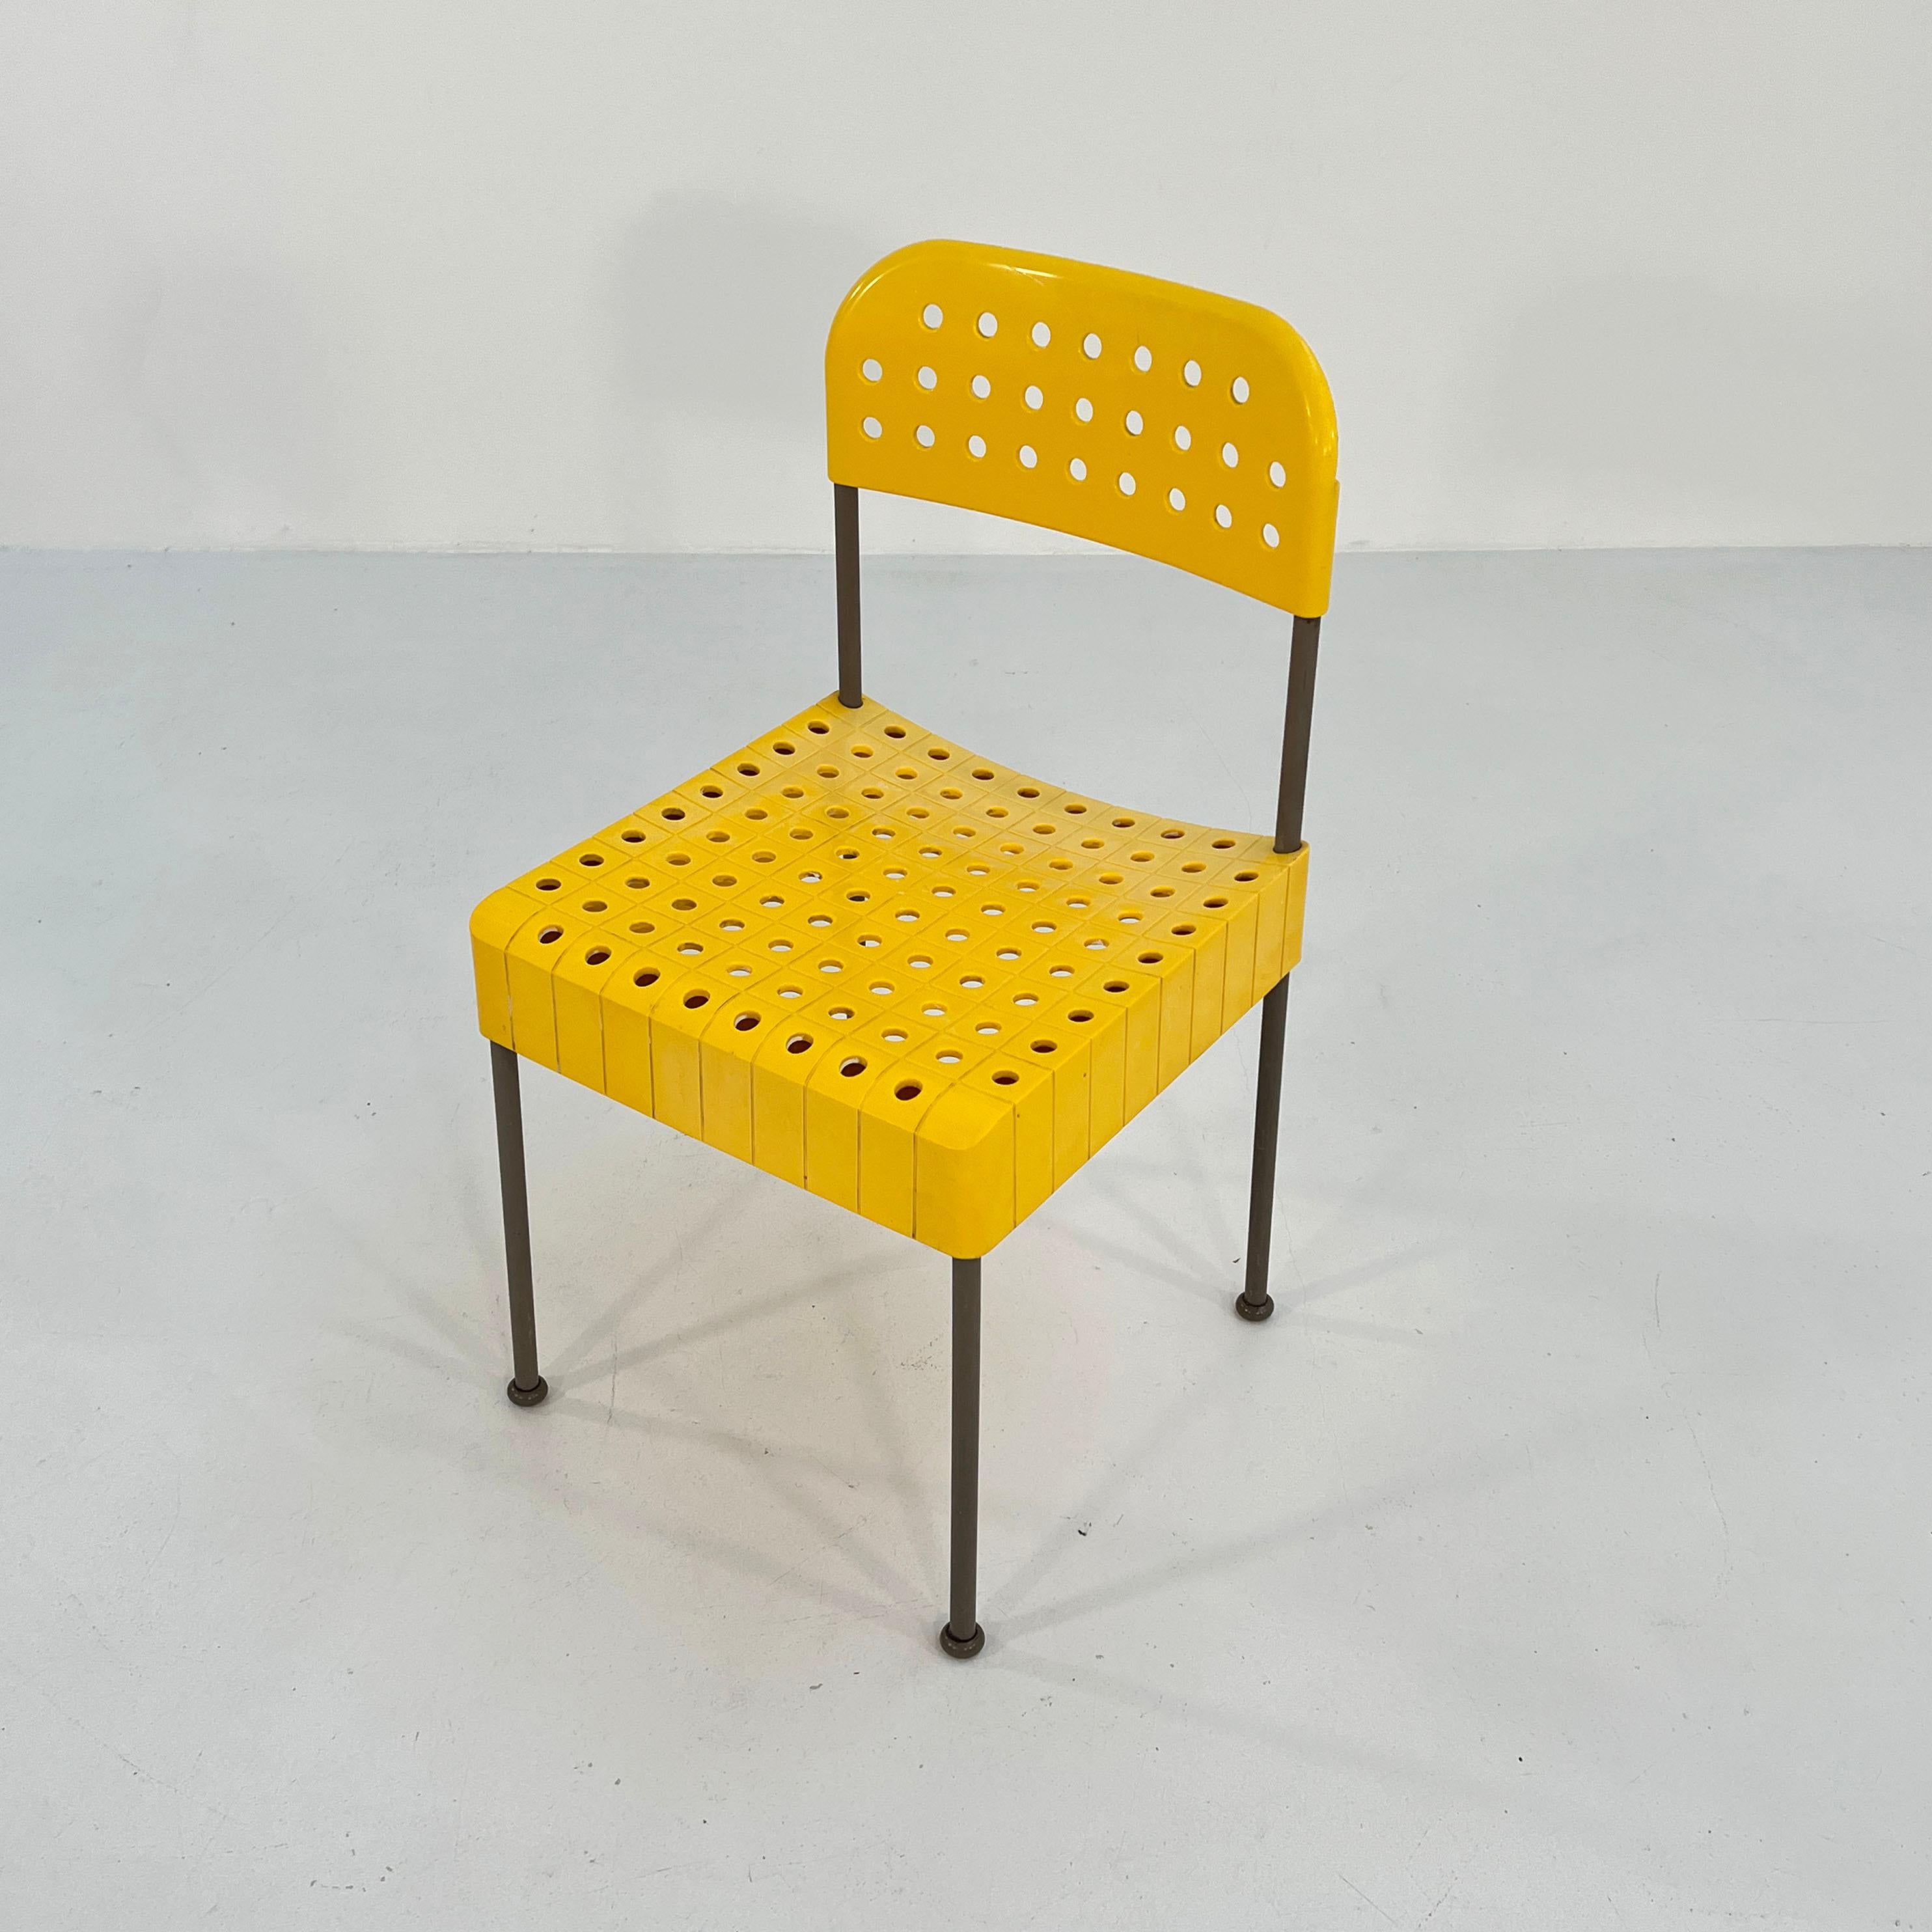 Designer - Enzo Mari
Producer - Anonima Castelli
Model - Box Chair
Design Period - Seventies
Measurements - Width 45 cm x Depth 44 cm x Height 80 cm x Seat Height 44 cm
Materials - Metal, Plastic
Color - Yellow, Grey.